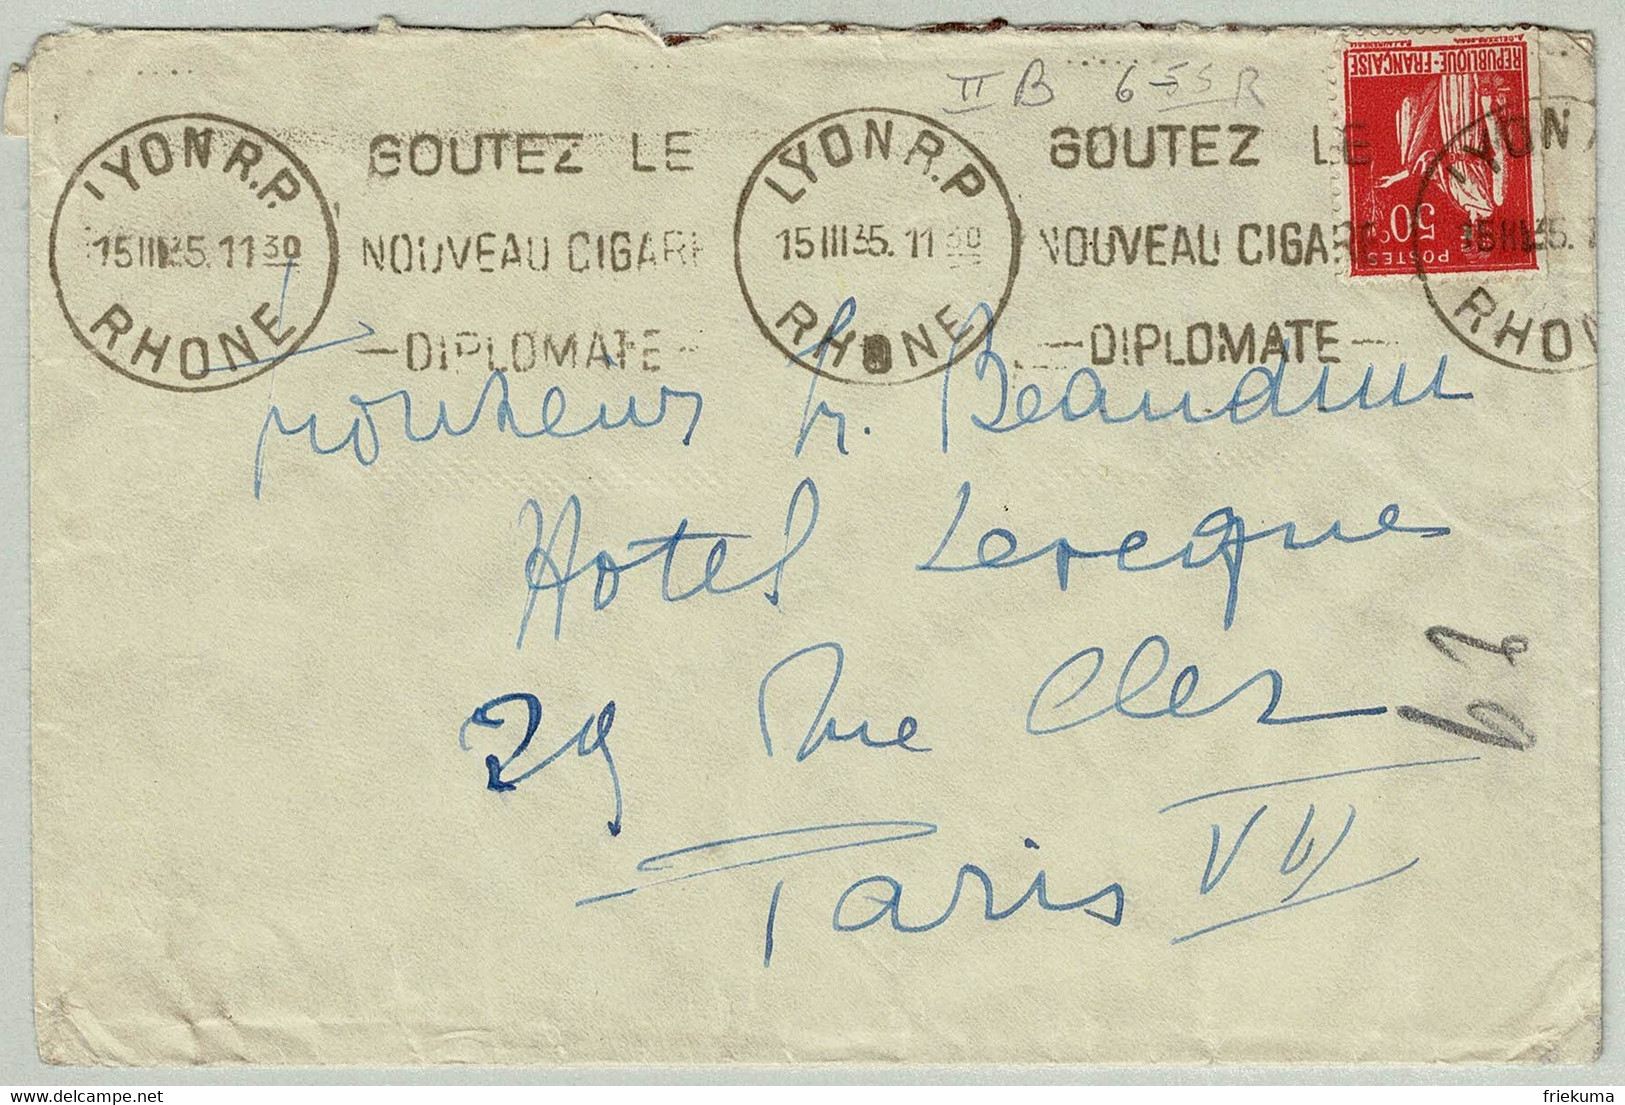 Frankreich / France 1935, Brief Lyon - Paris, Cigare / Zigarren / Cigars, Tabac / Tobacco, Rauchen / Fumer / Smoking - Drugs